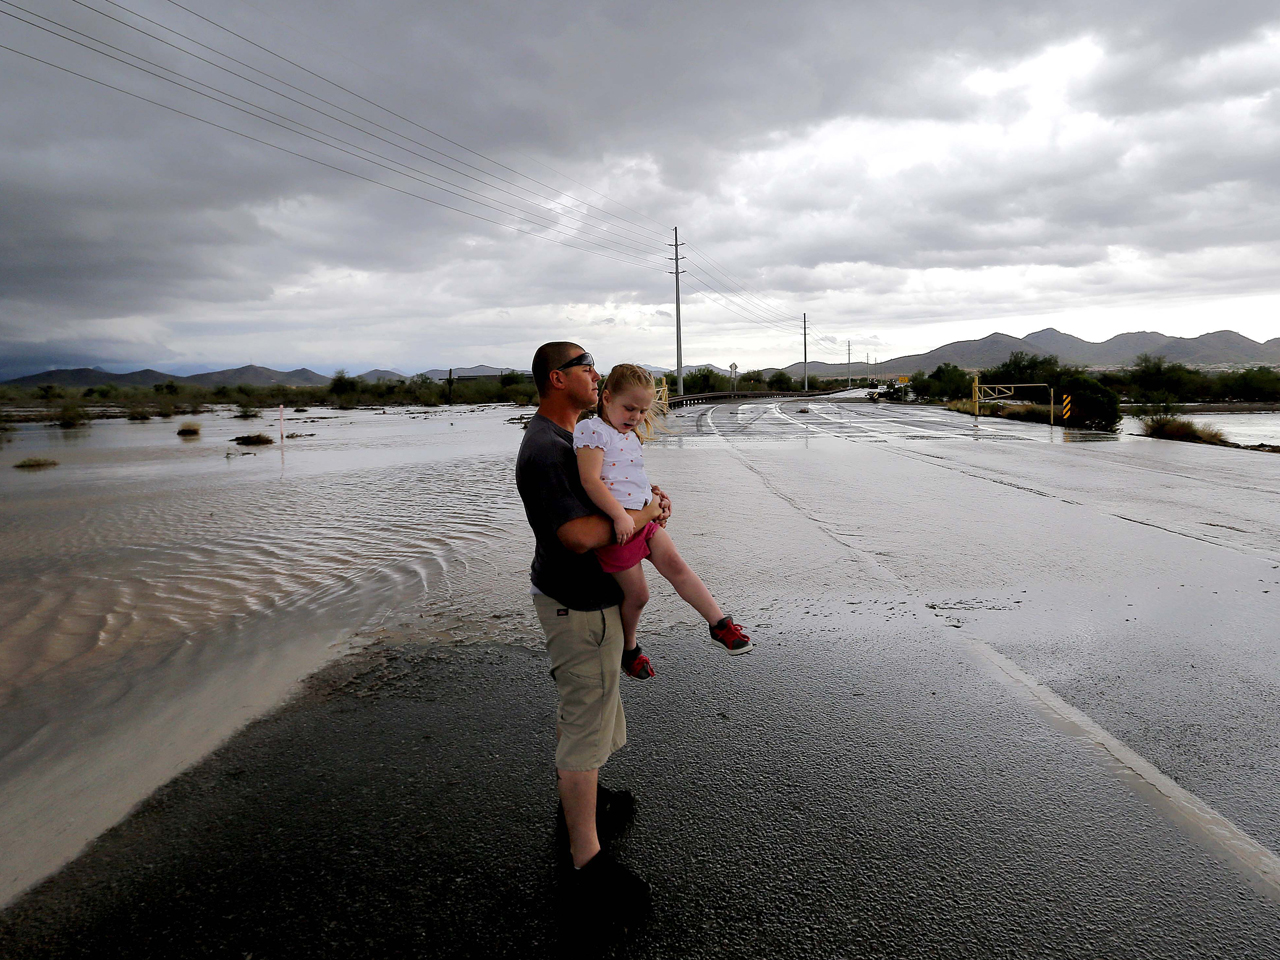 Phoenix, Arizonaarea severe flooding made for dramatic rescues CBS News